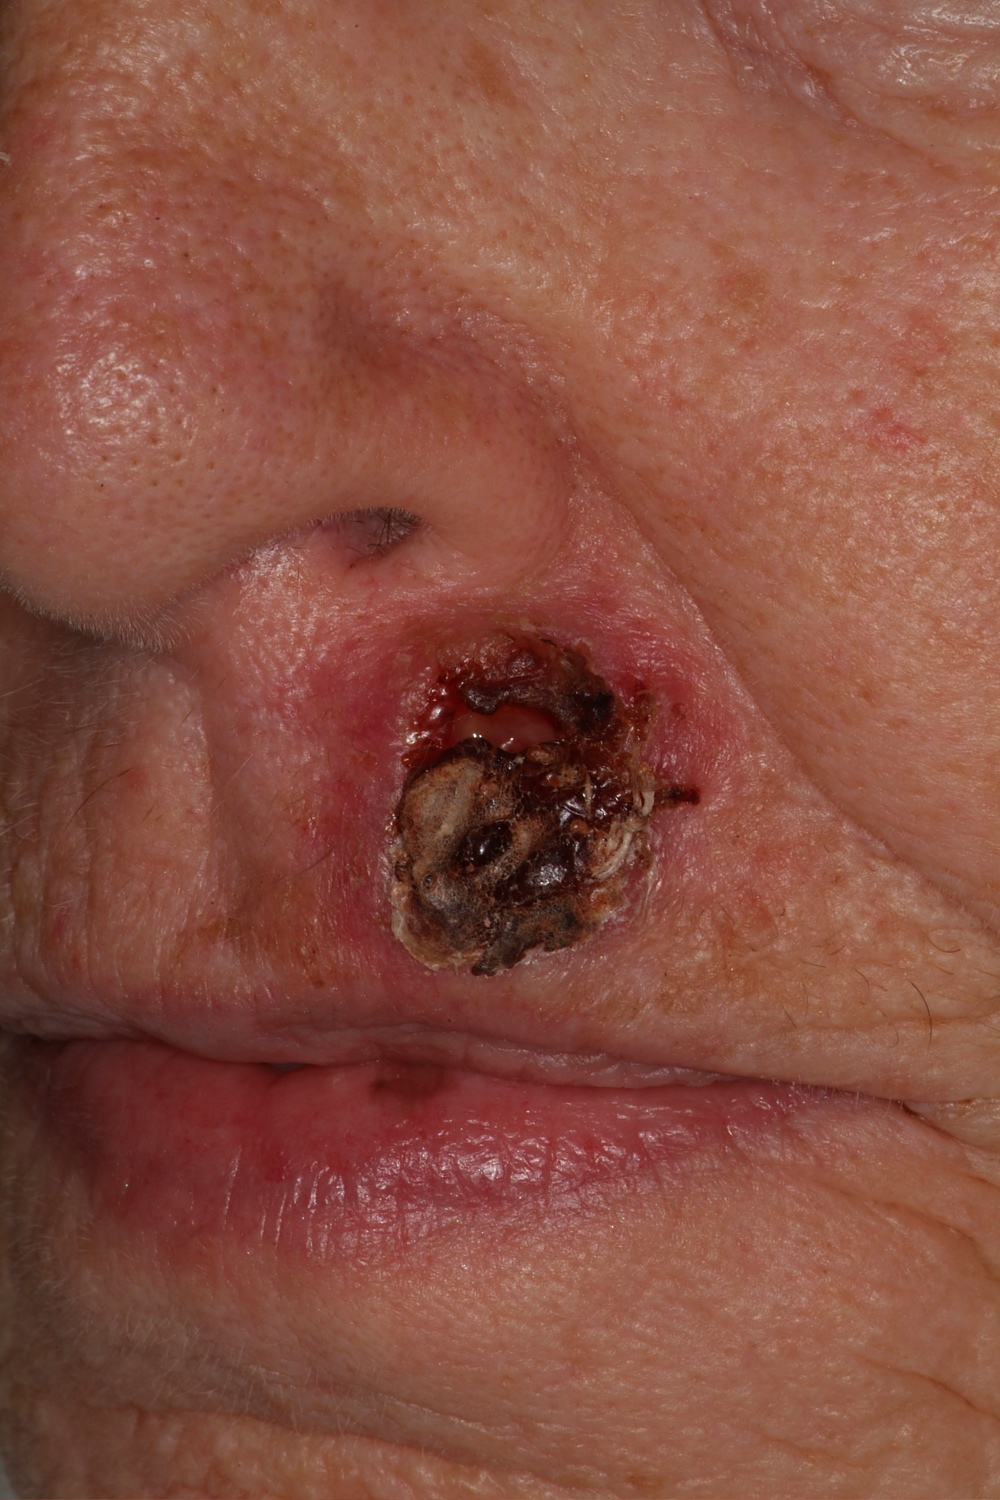 Lip Squamous Cell Carcinoma